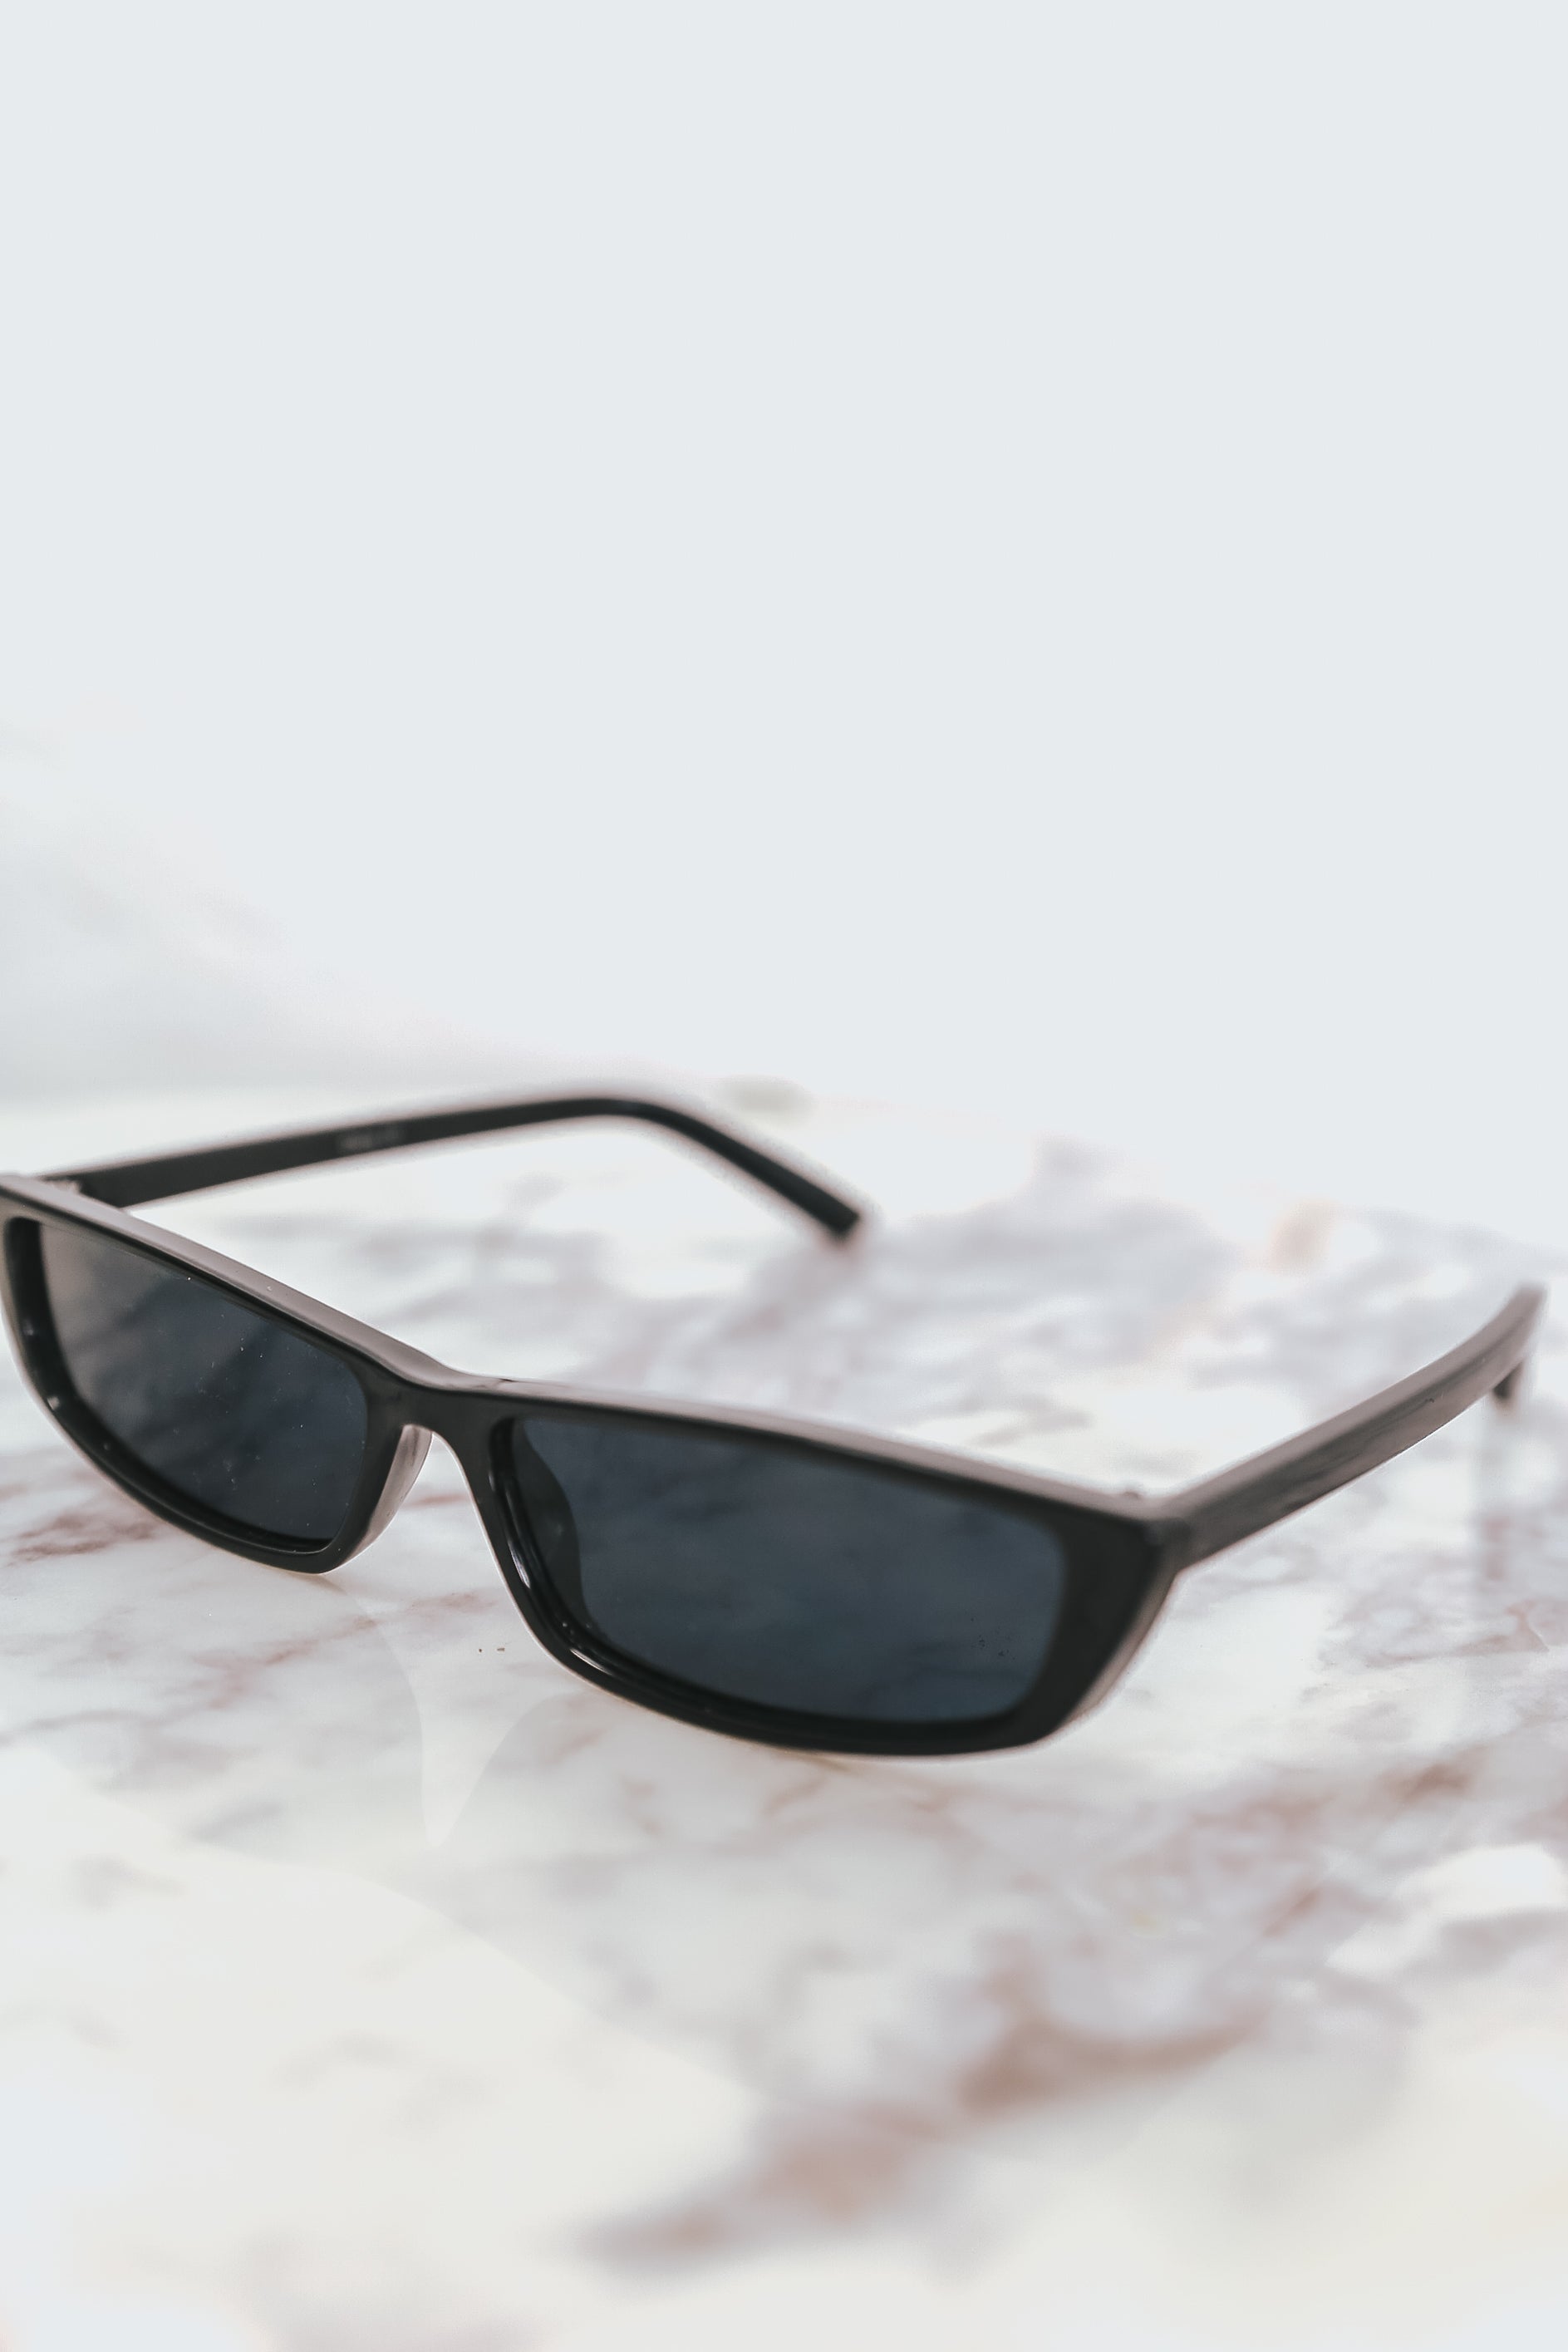 Small round sunglasses polarized black lens men tortoise glasses women  sunglass | eBay